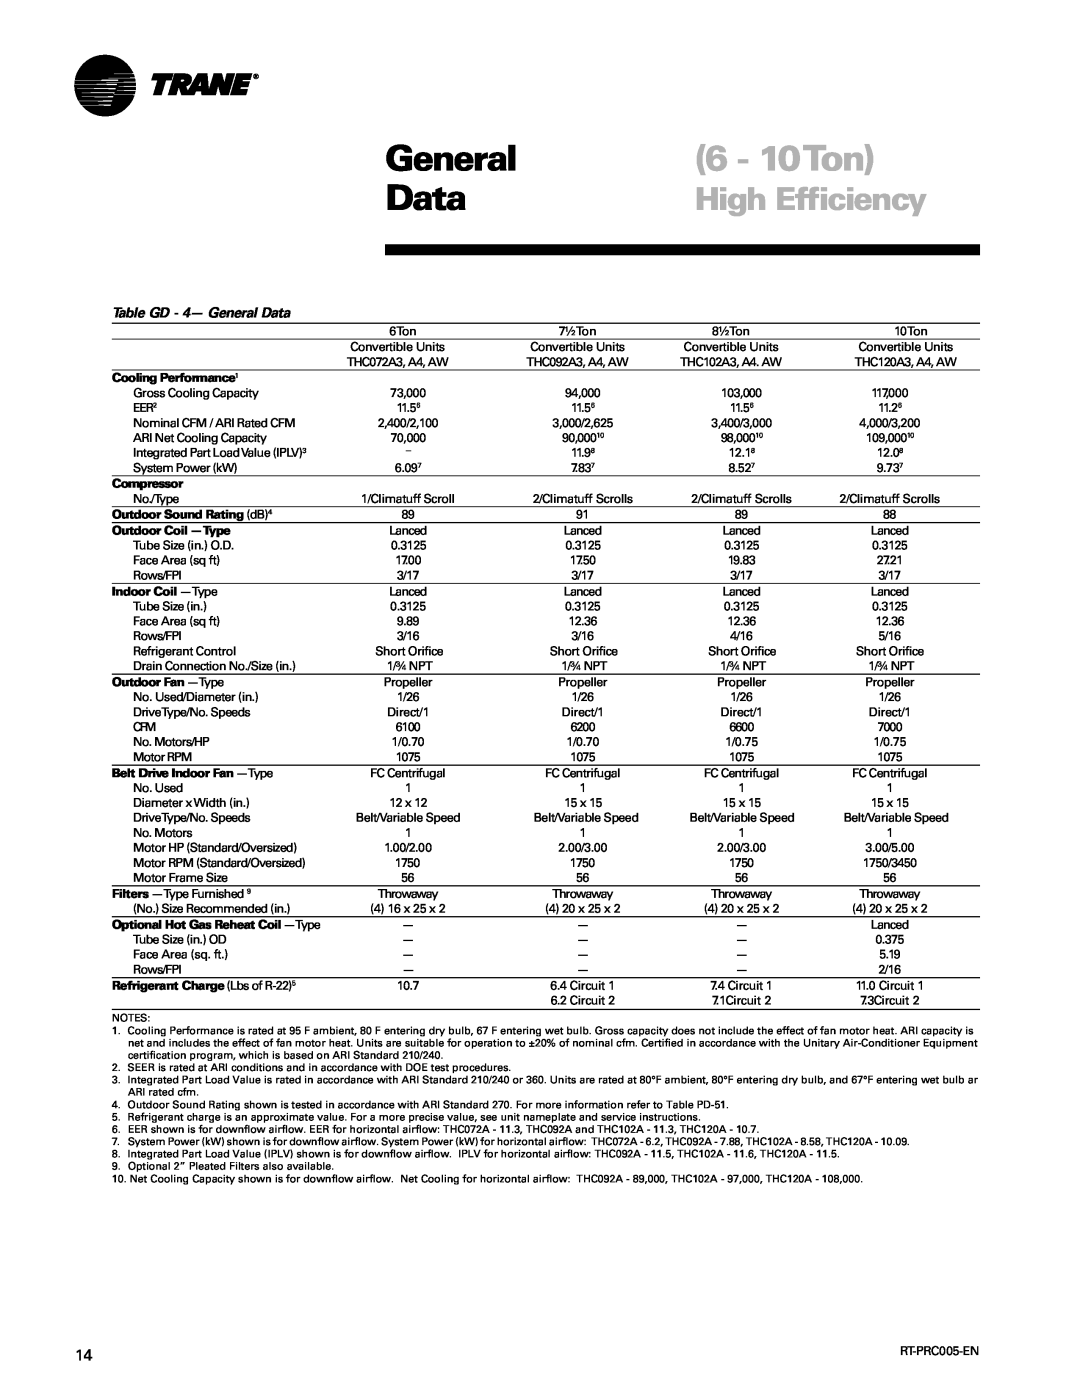 Trane RT-PRC005 manual 6 - 10Ton, High Efficiency, Table GD - 4- General Data 